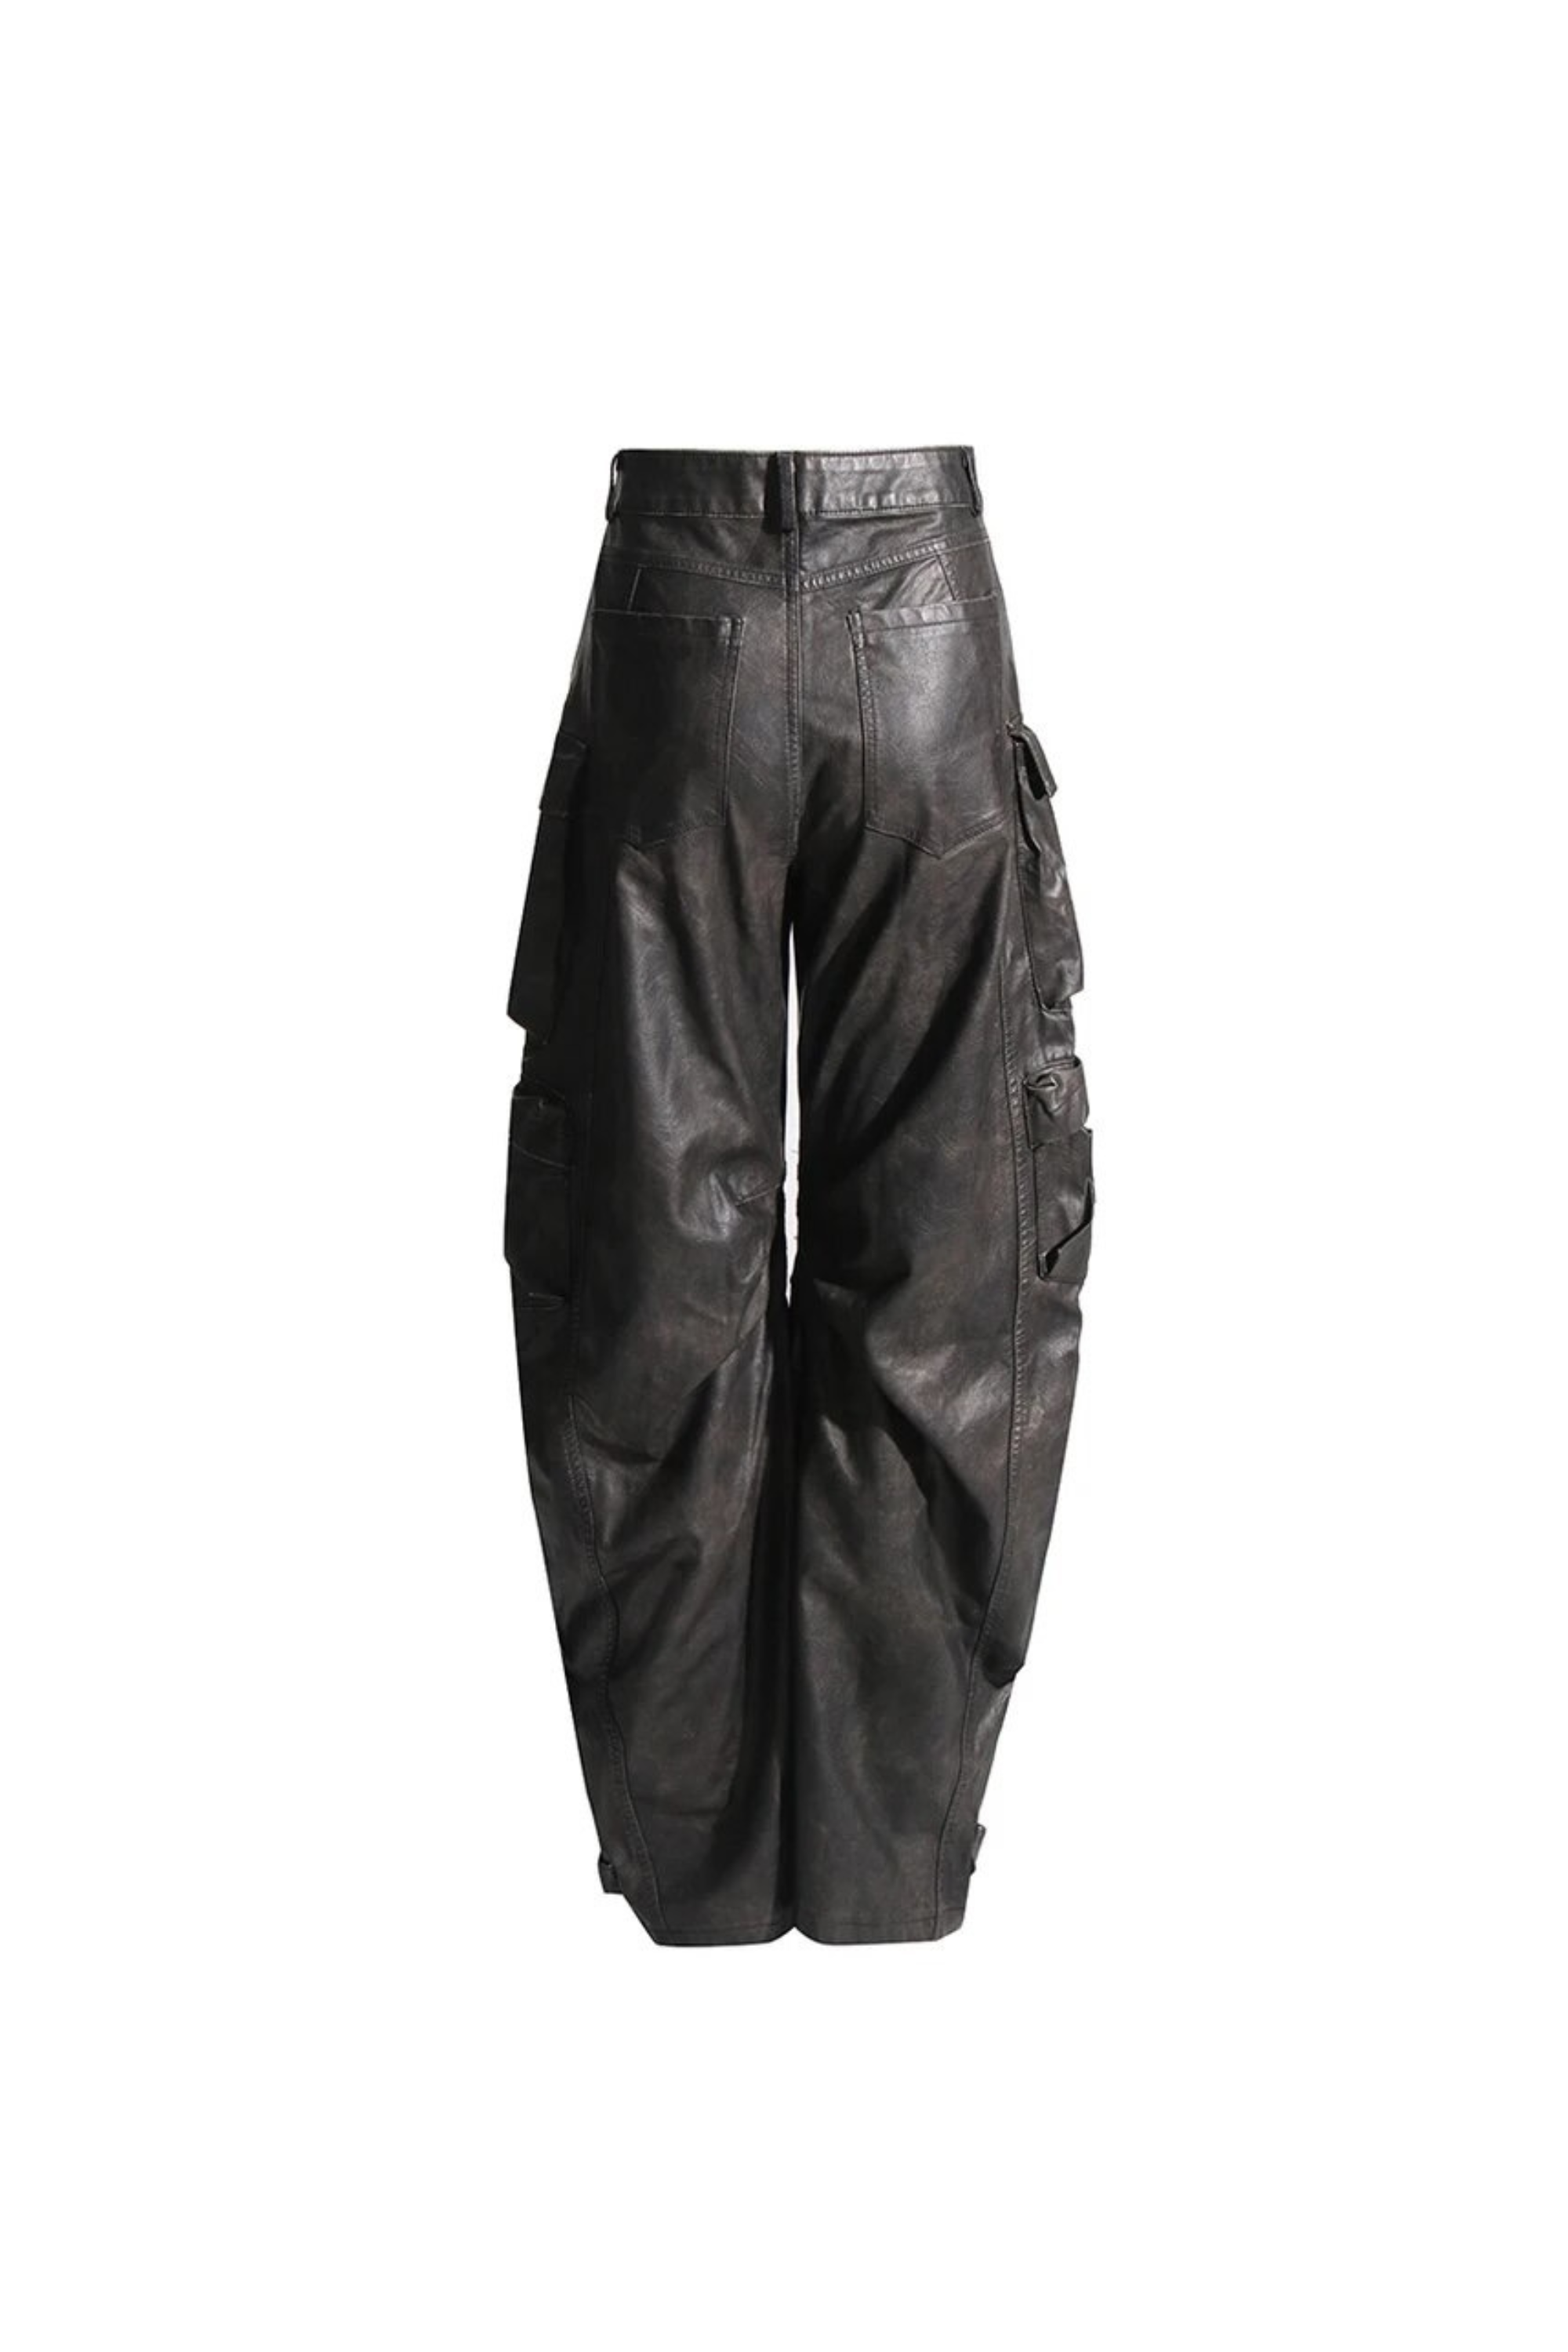 GOLDxTEAL vintage vegan leather cargo pants.